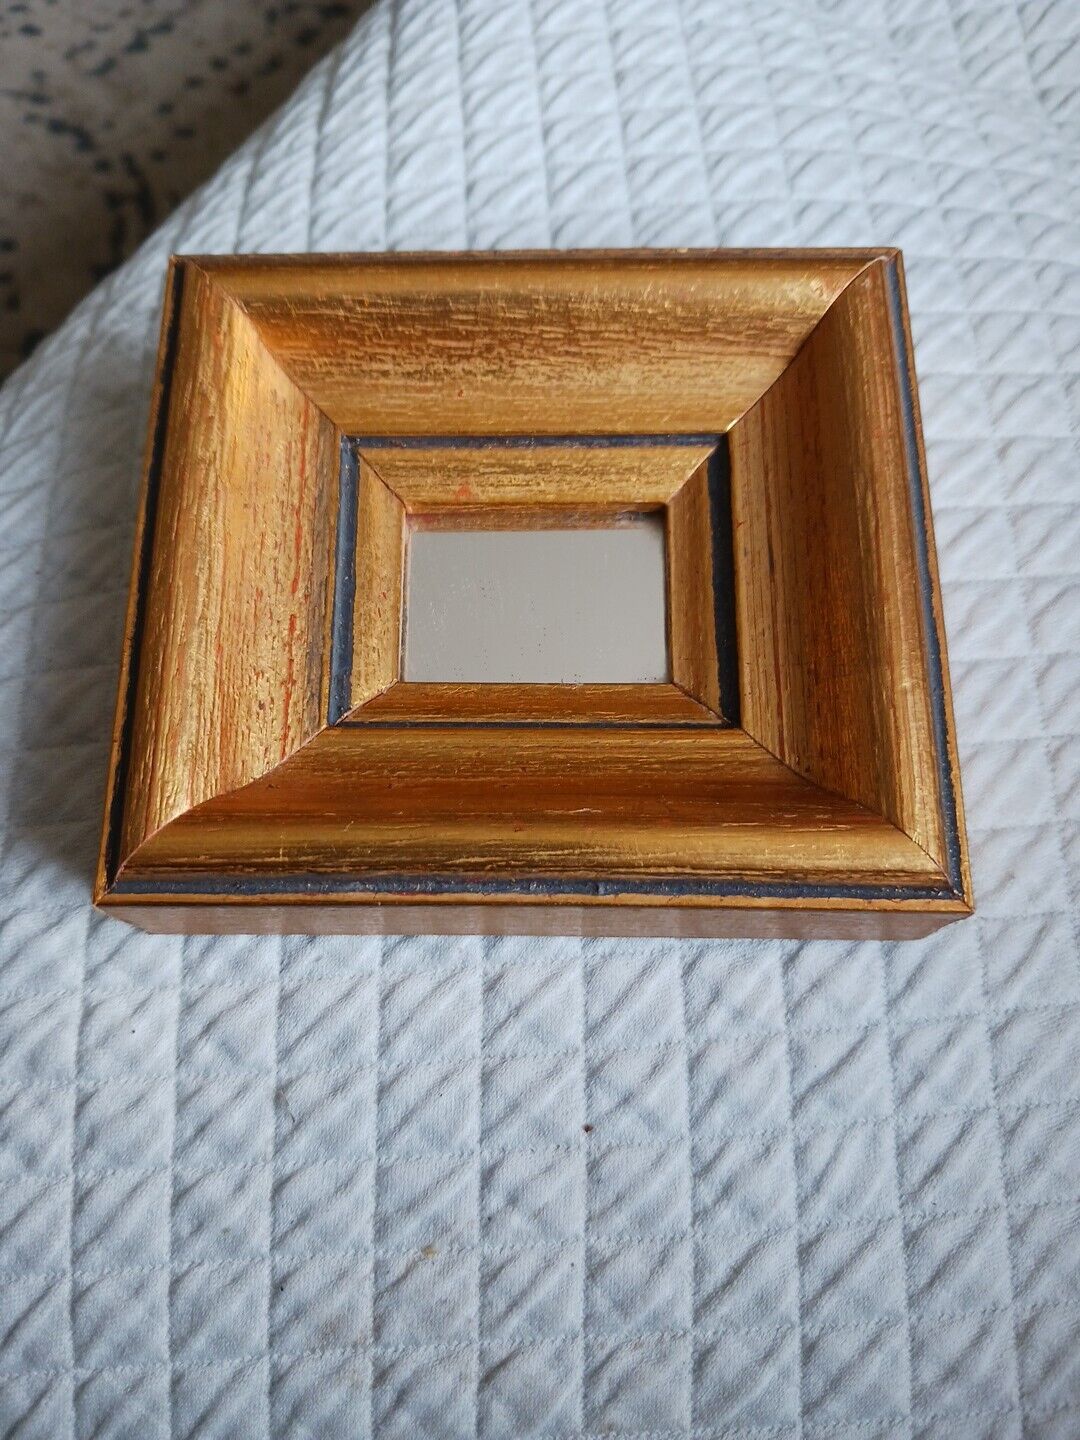 Antique Wood Gold Gilt Miniature Picture Frame W/Mirror 4x3.5x1. Spain